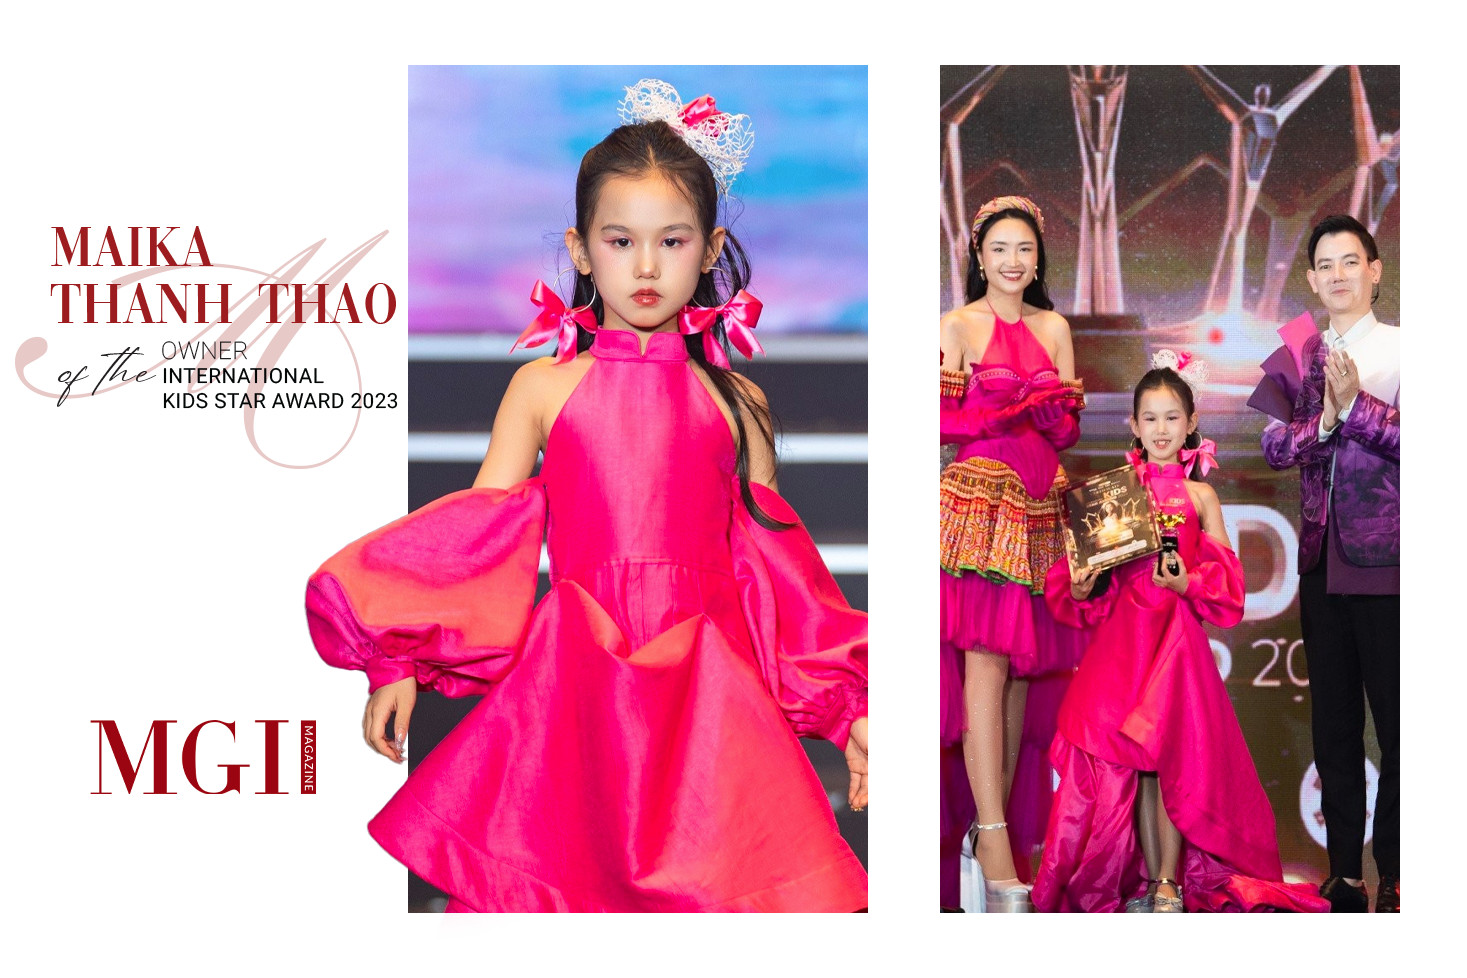 Maika Thanh Thao - Owner of the International Kids Star Award 2023